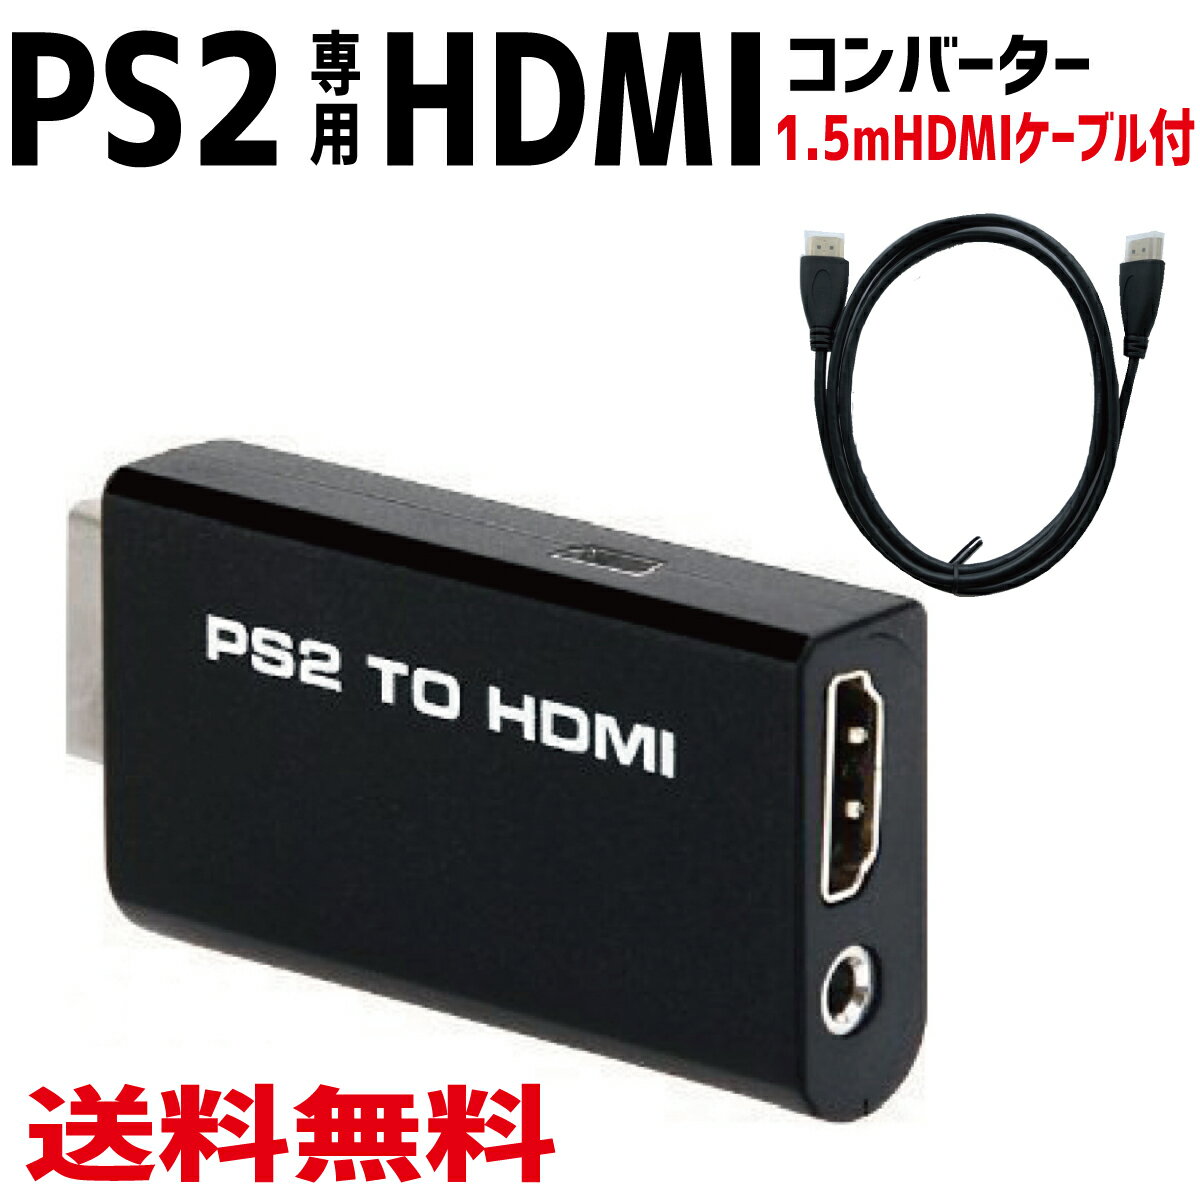 【P2倍!】 PS2 TO HDMI コンバーター PS2専用 PS2 to HDMI 接続コネクタ ...